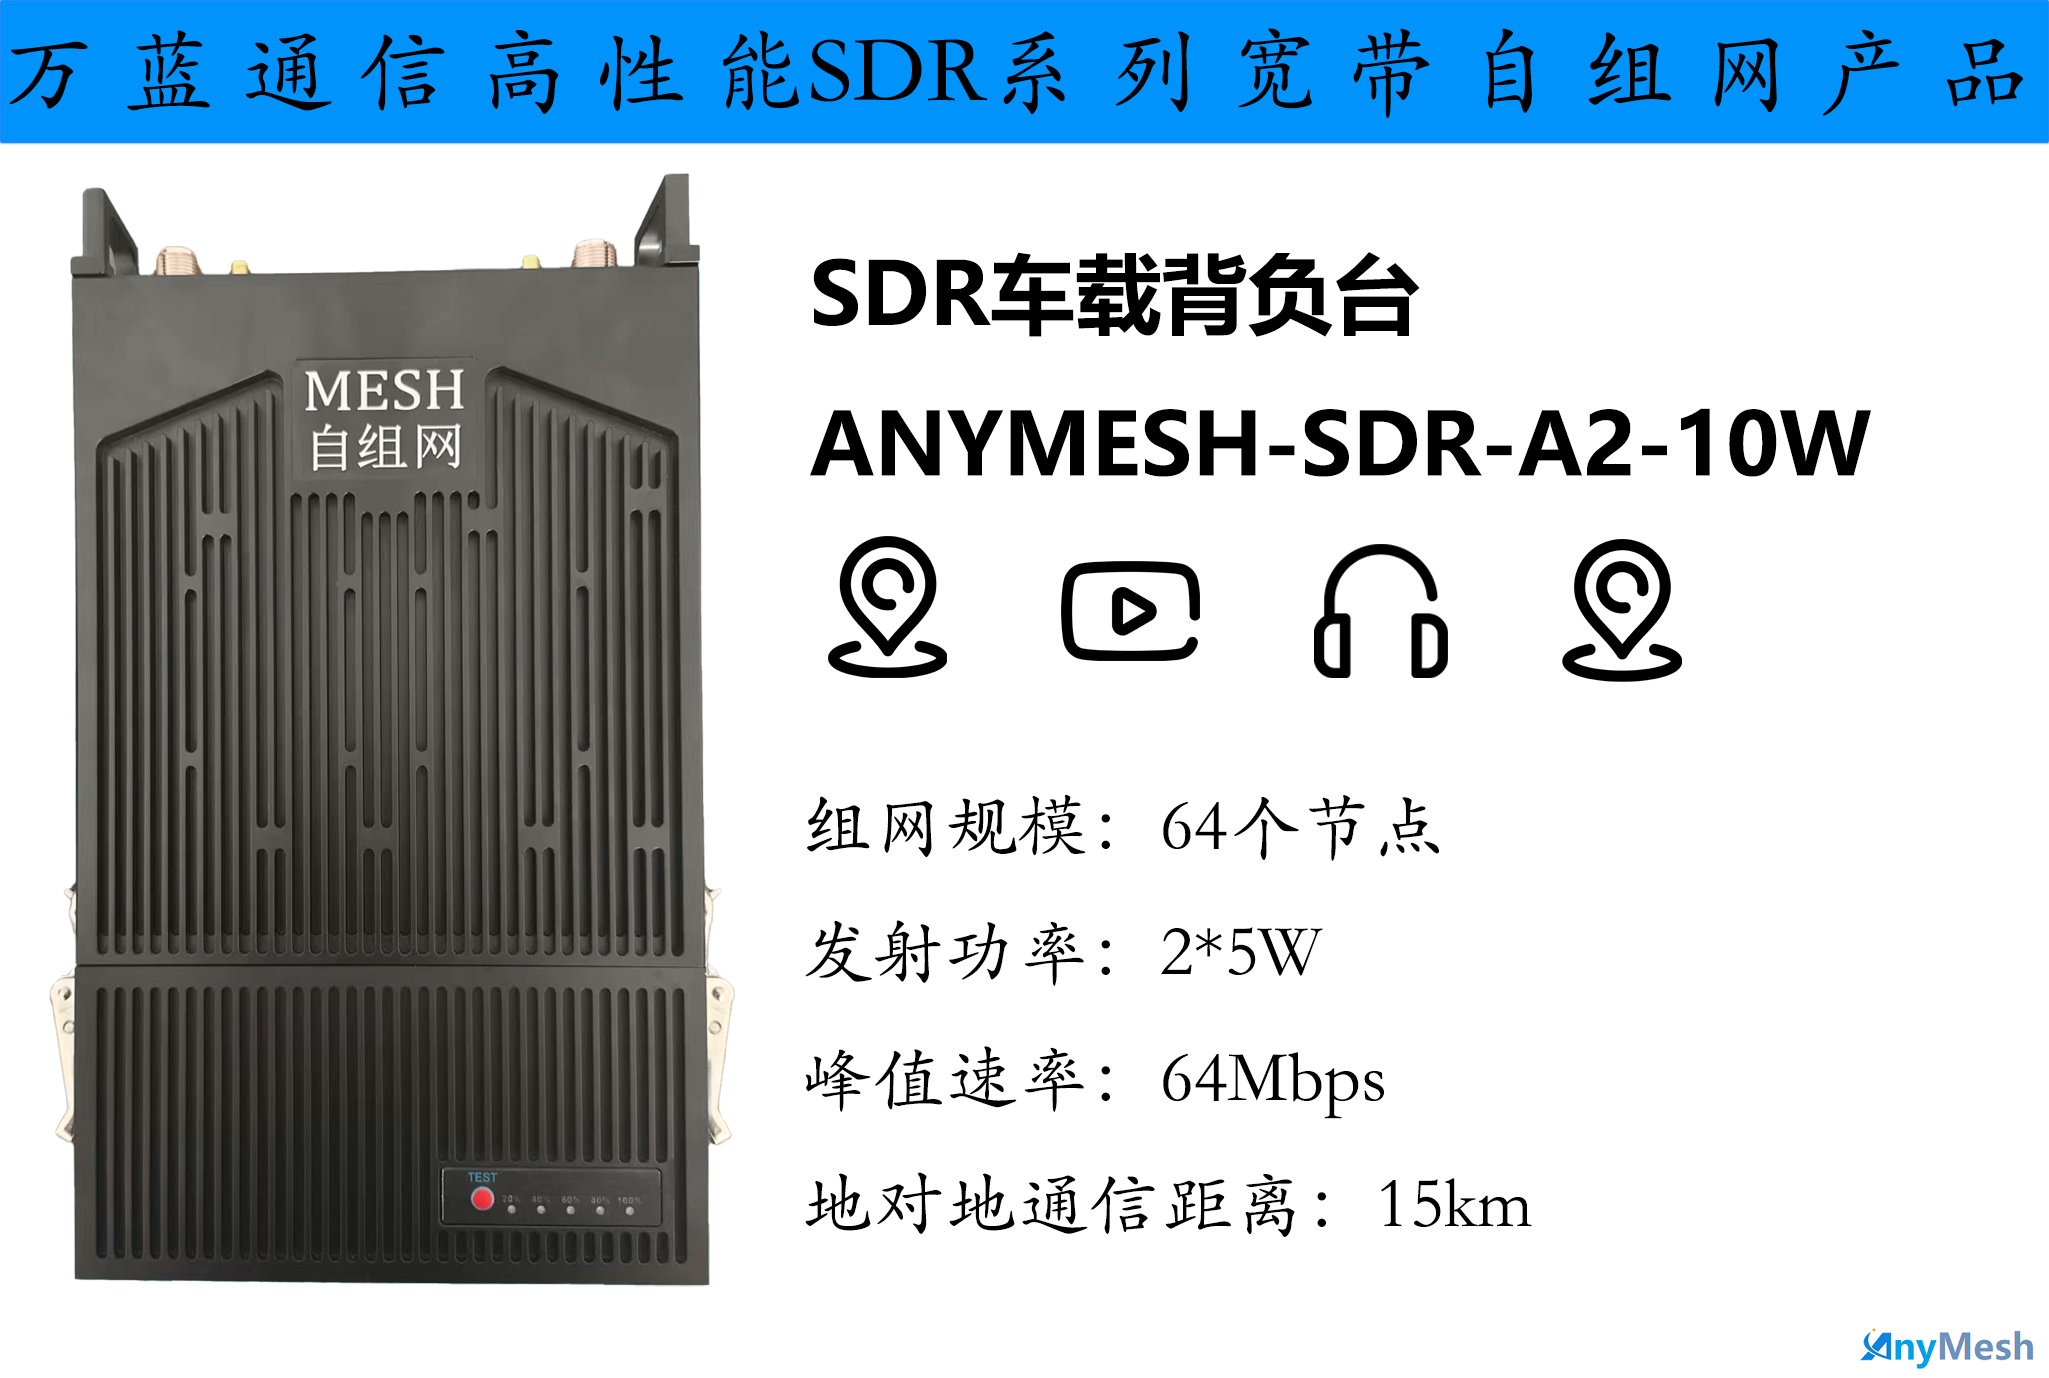 ANYMESH-SDR-A2-10W车载背负型自组网设备 10